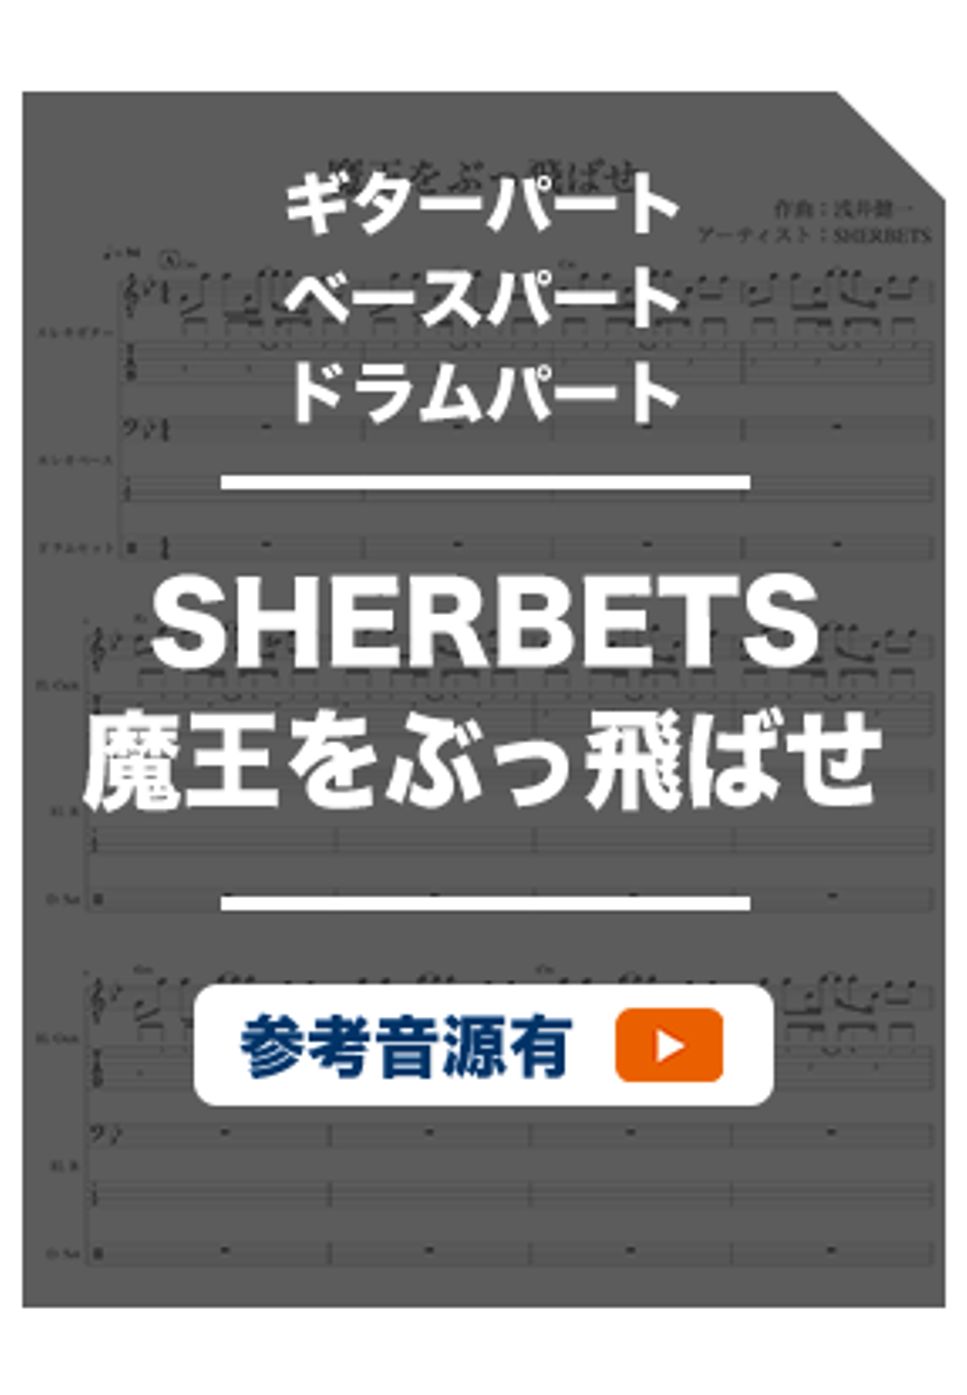 SHERBETS - 魔王をぶっとばせ by ホットレモンティーのレモン